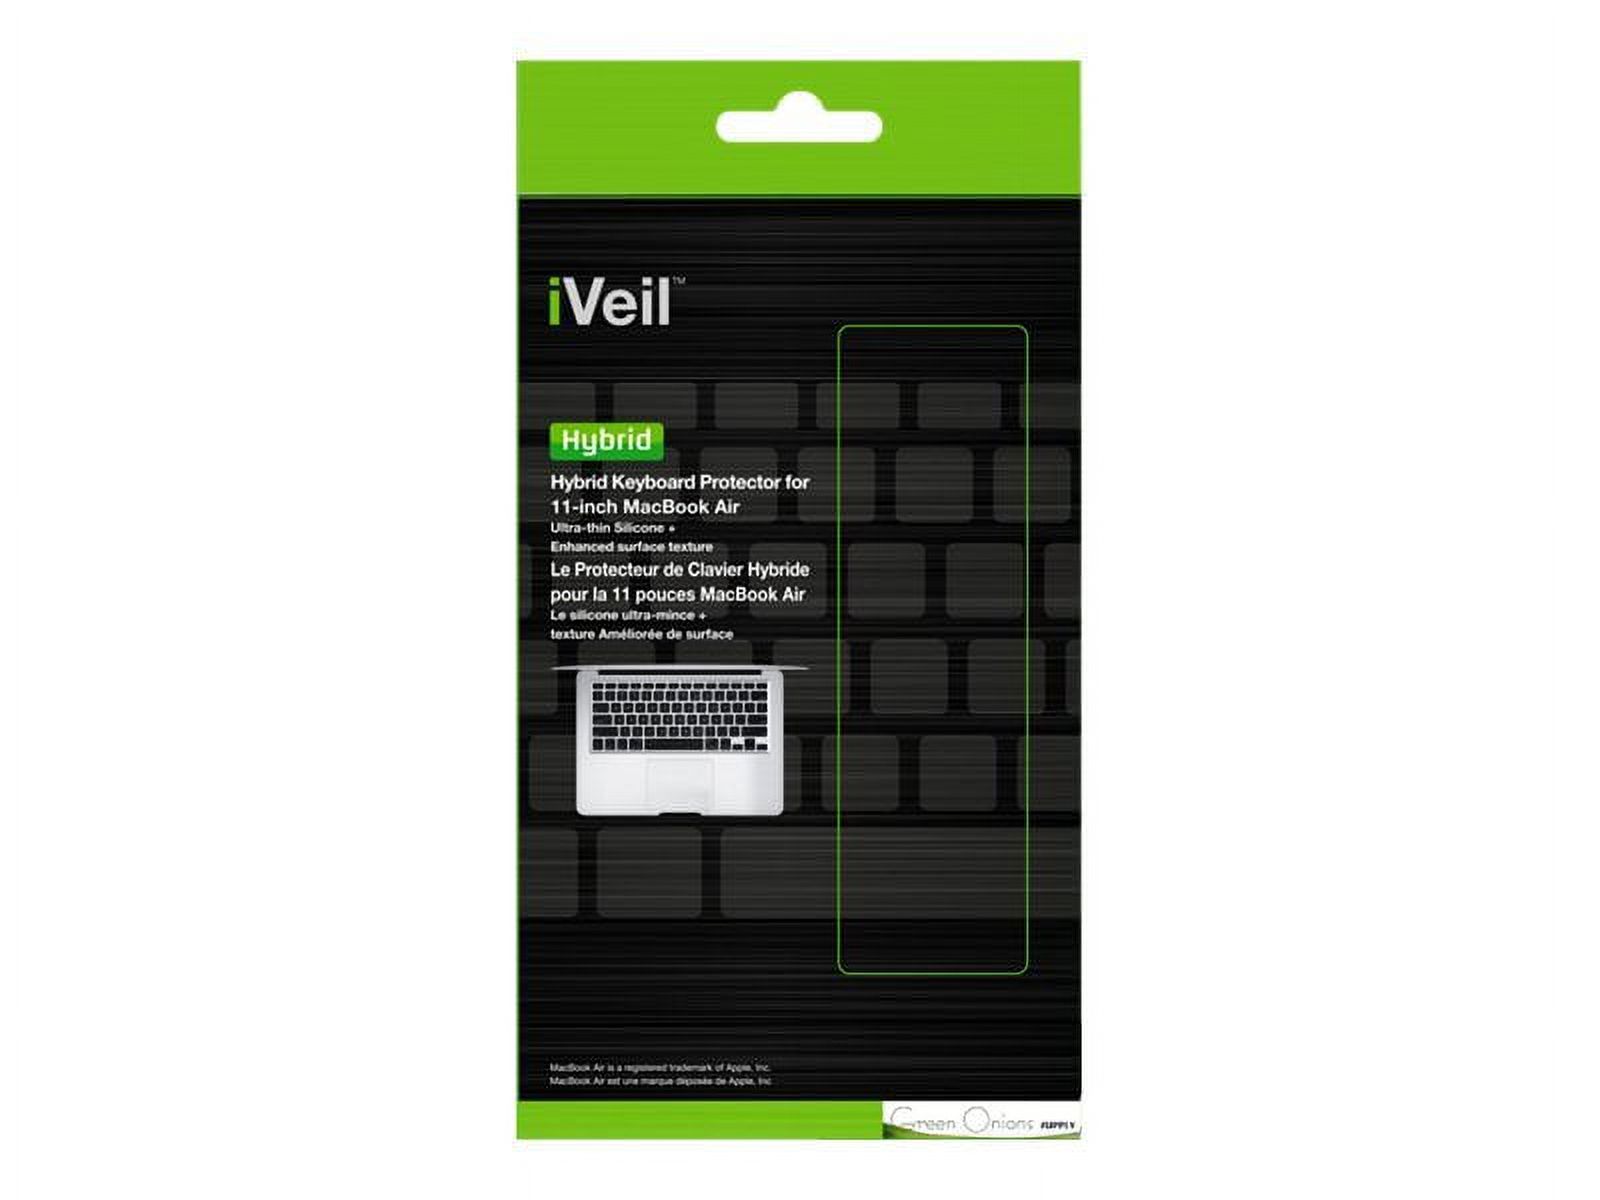 Green Onions Supply iVeil Hybrid Keyboard Skin - image 5 of 5